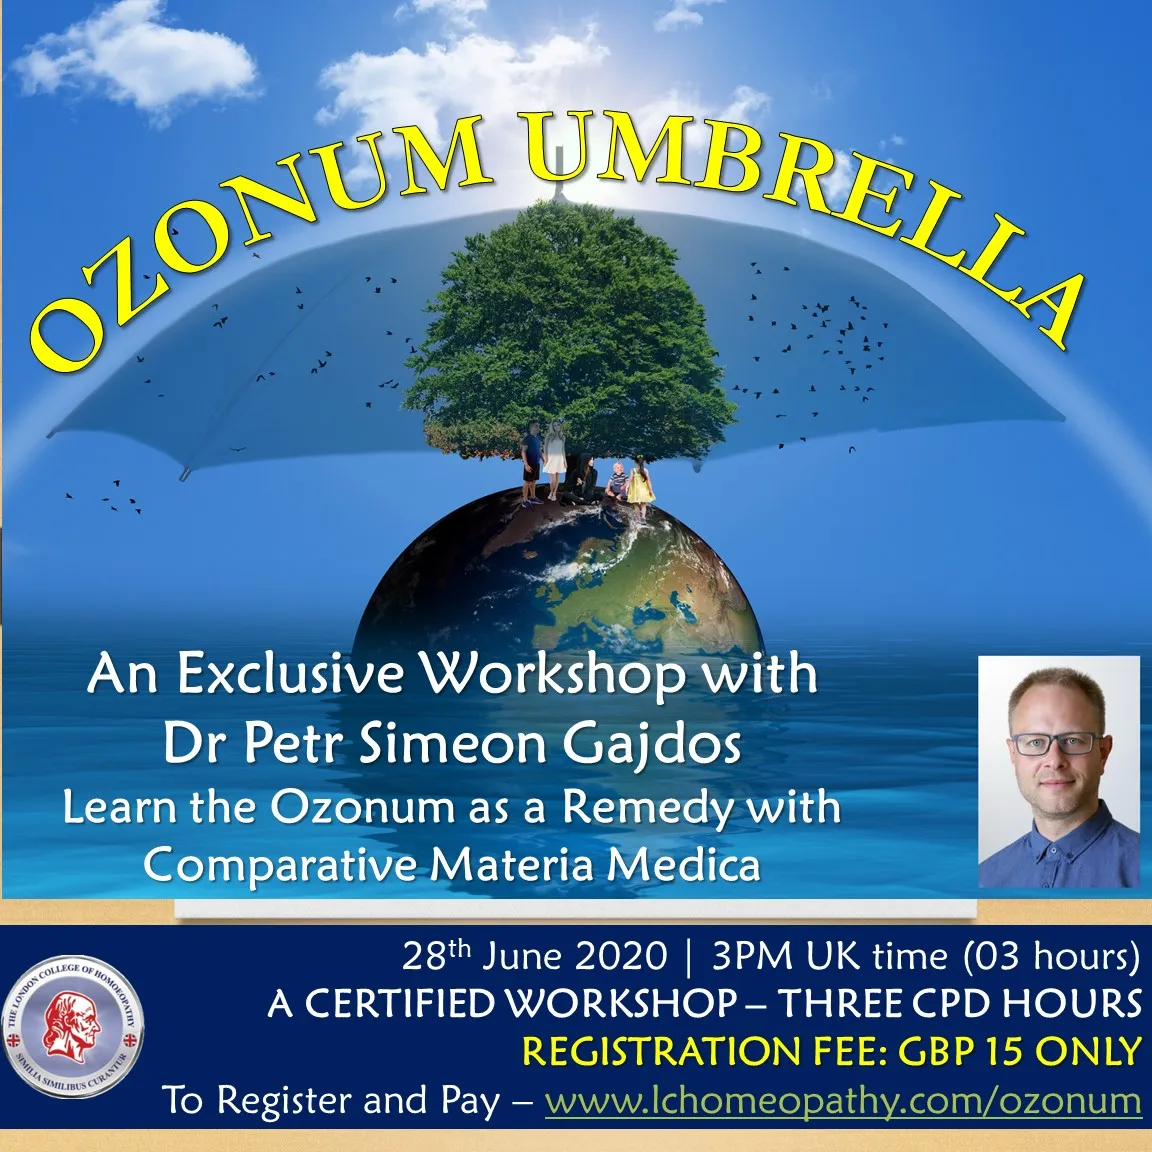 Ozonum Umbrella – A workshop with Dr Petr Gajdos